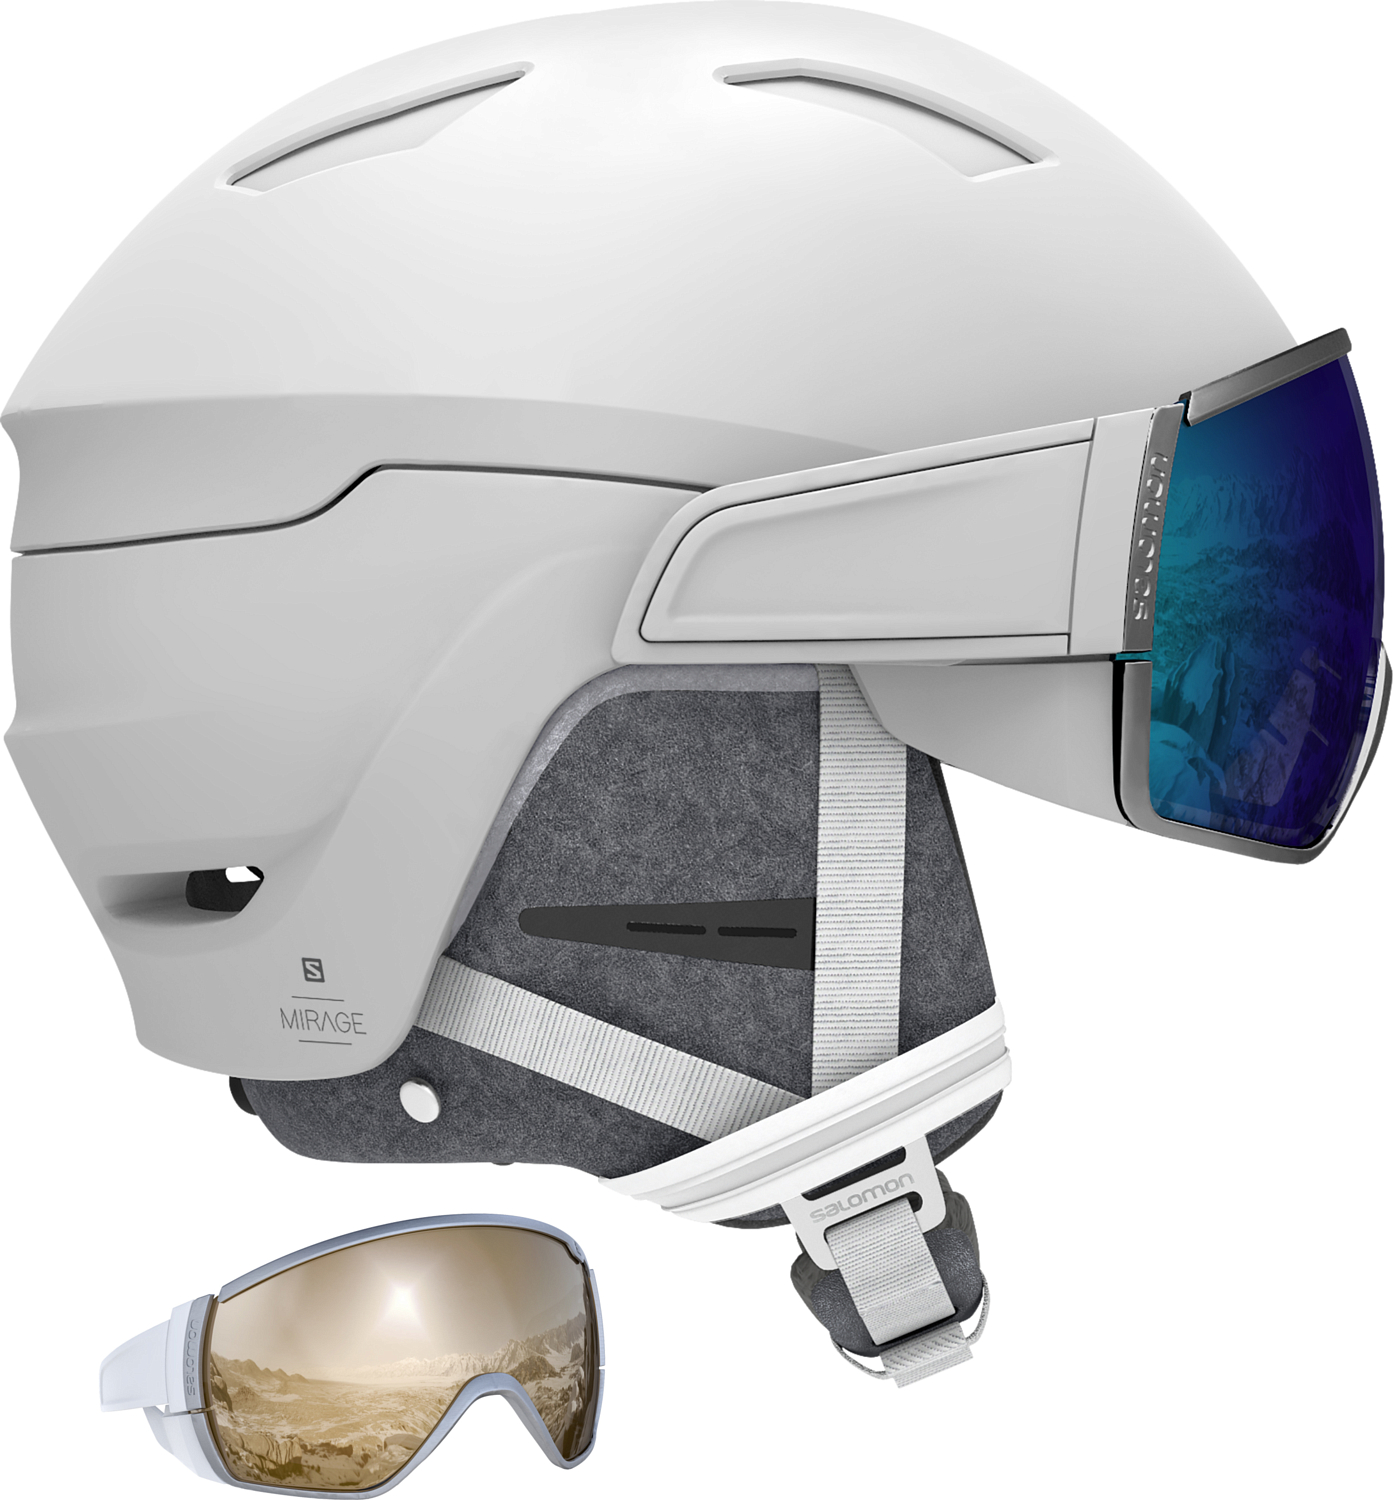 Зимний Шлем SALOMON 2020-21 Mirage+ White/Solar Blue/Solar